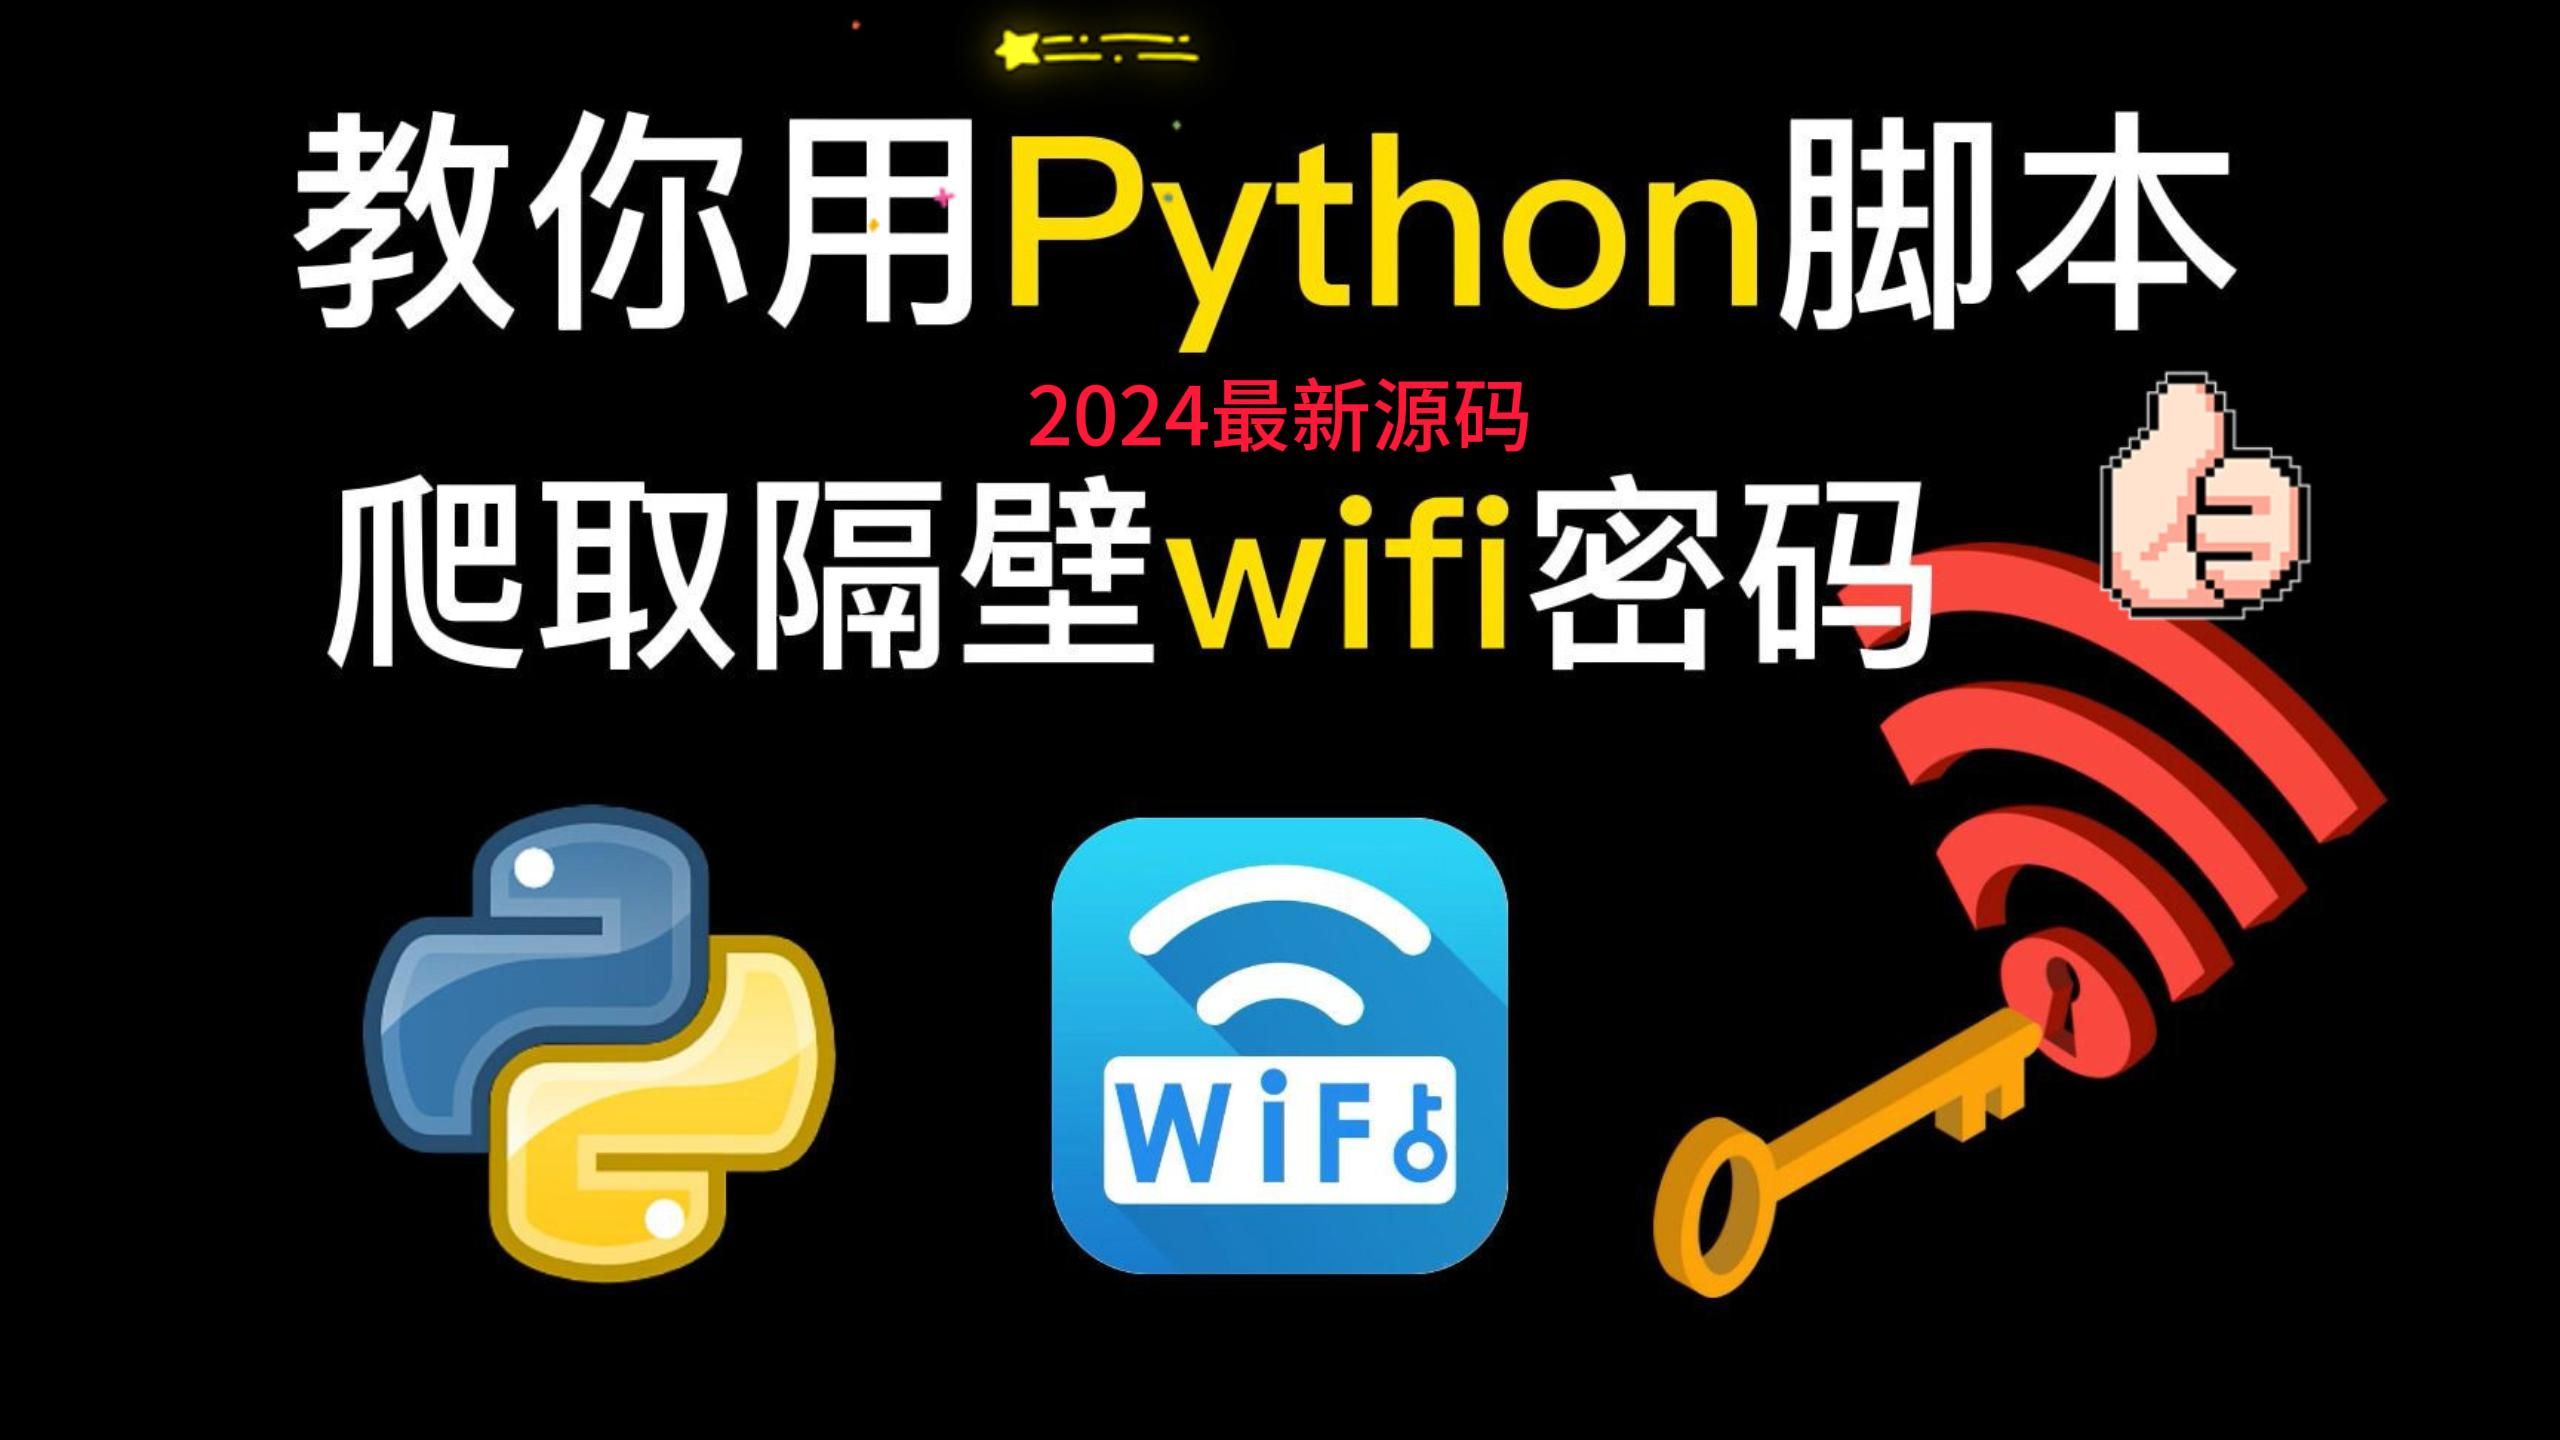 【python脚本】叫你用python脚本，白嫖隔壁WiFi密码~